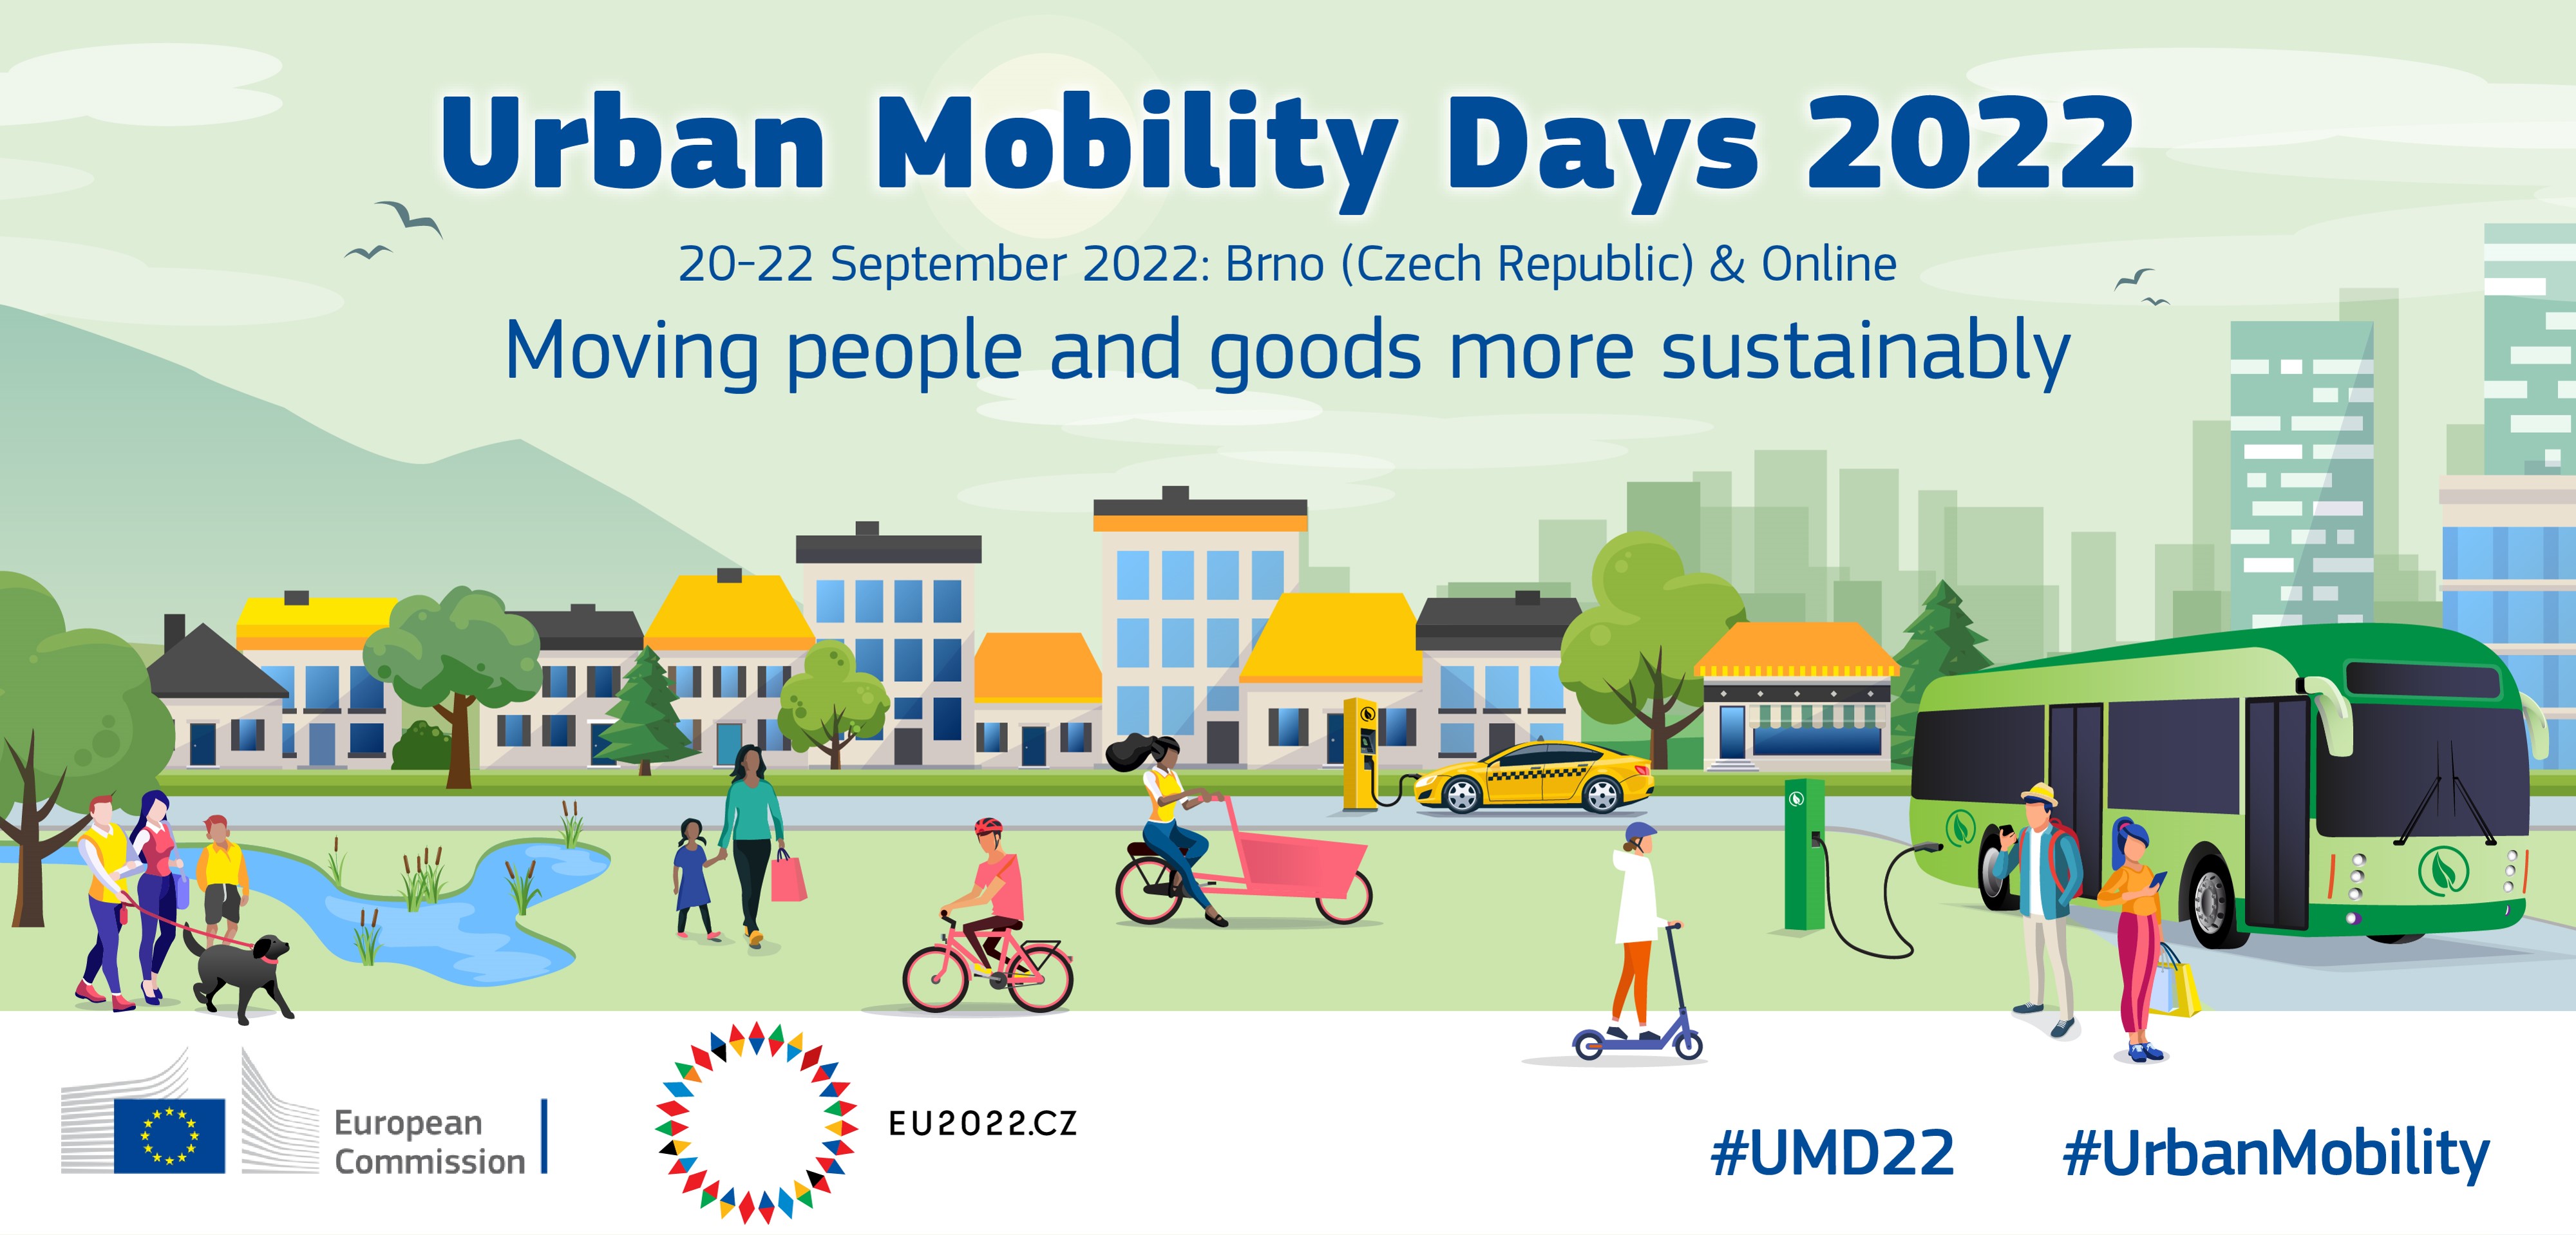 Urban Mobility Days 2022 